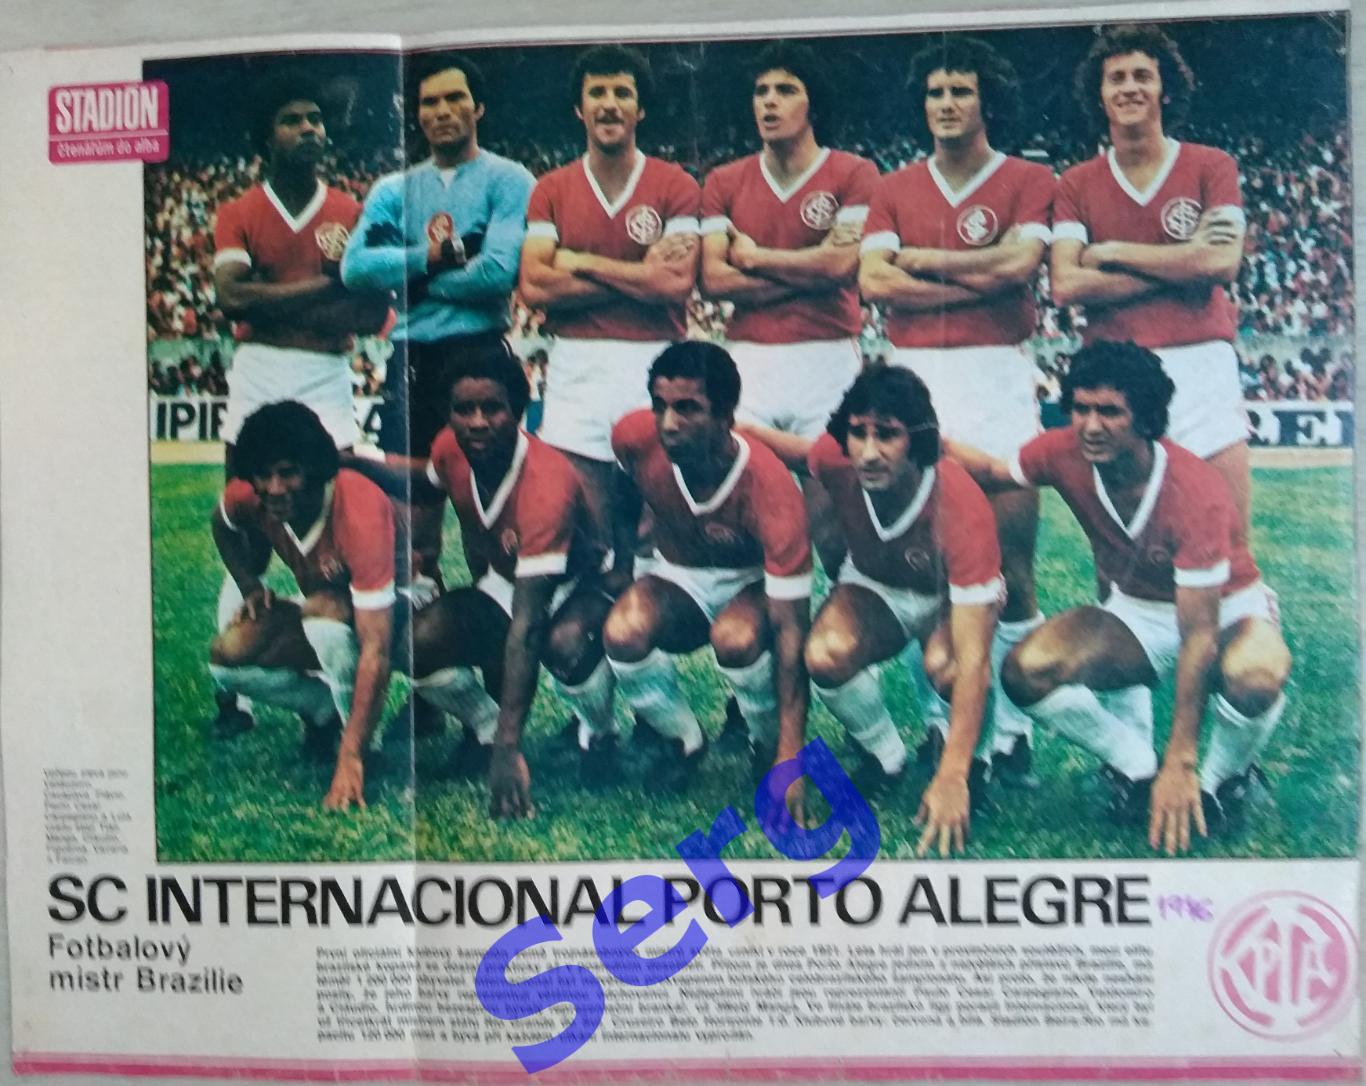 Постер Интернасьонал Порту-Алегри, Бразилия из журнала Стадион (Stadion)